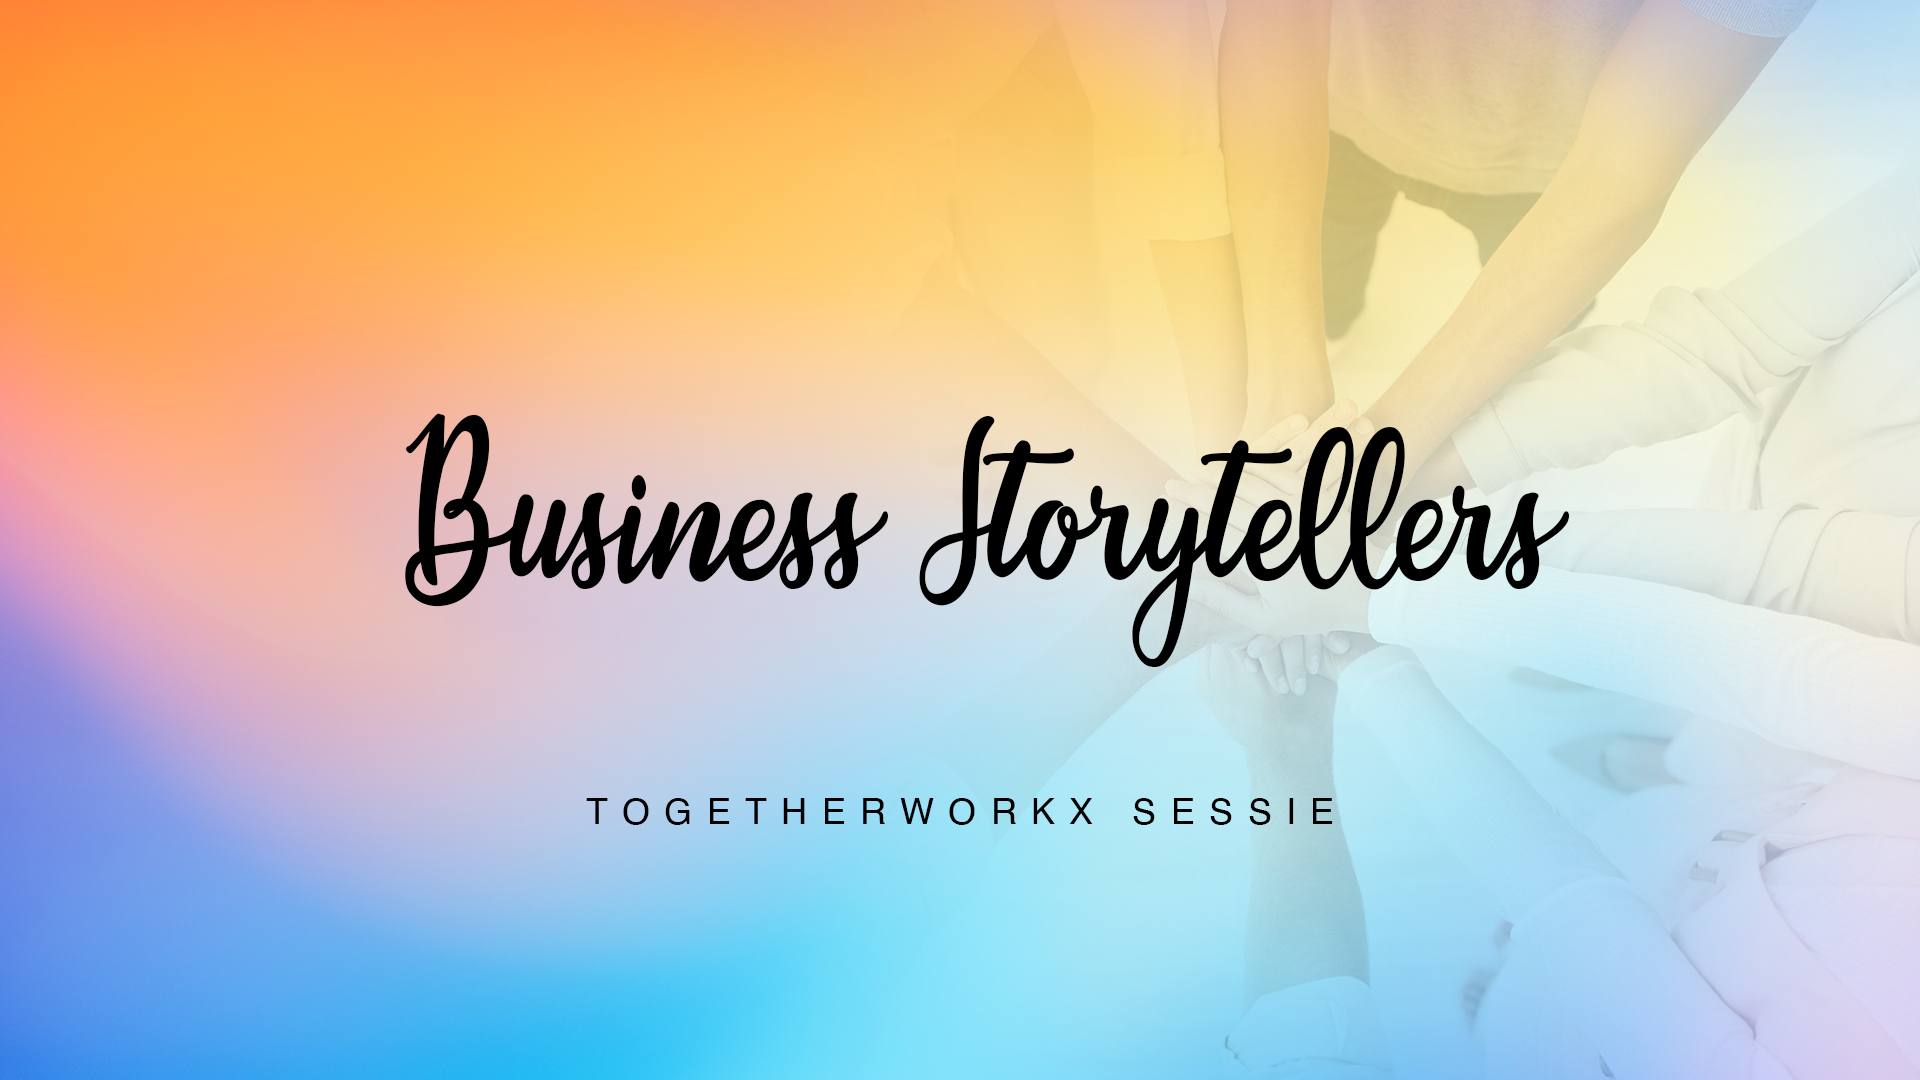 Business Storytellers - TogetherWorkx